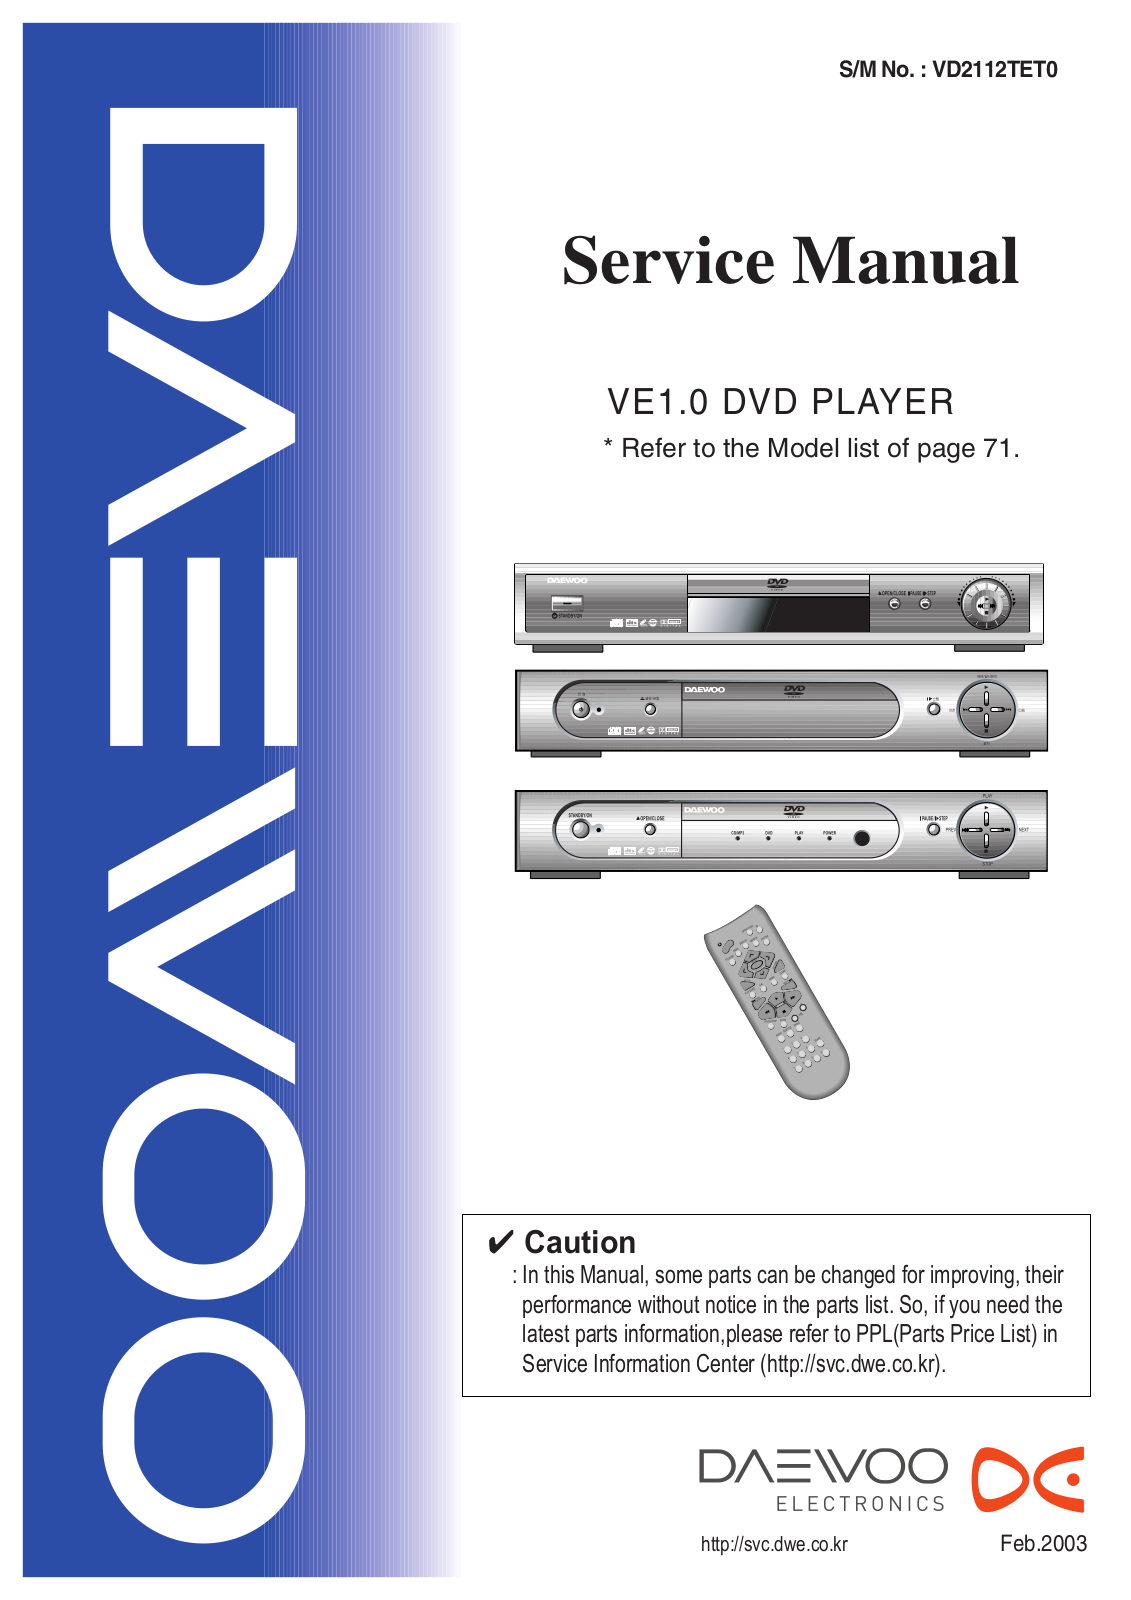 Daewoo DQD-2112, DQD-220K, DQD-6112, DQD-2212, DQD-2312 Service Manual